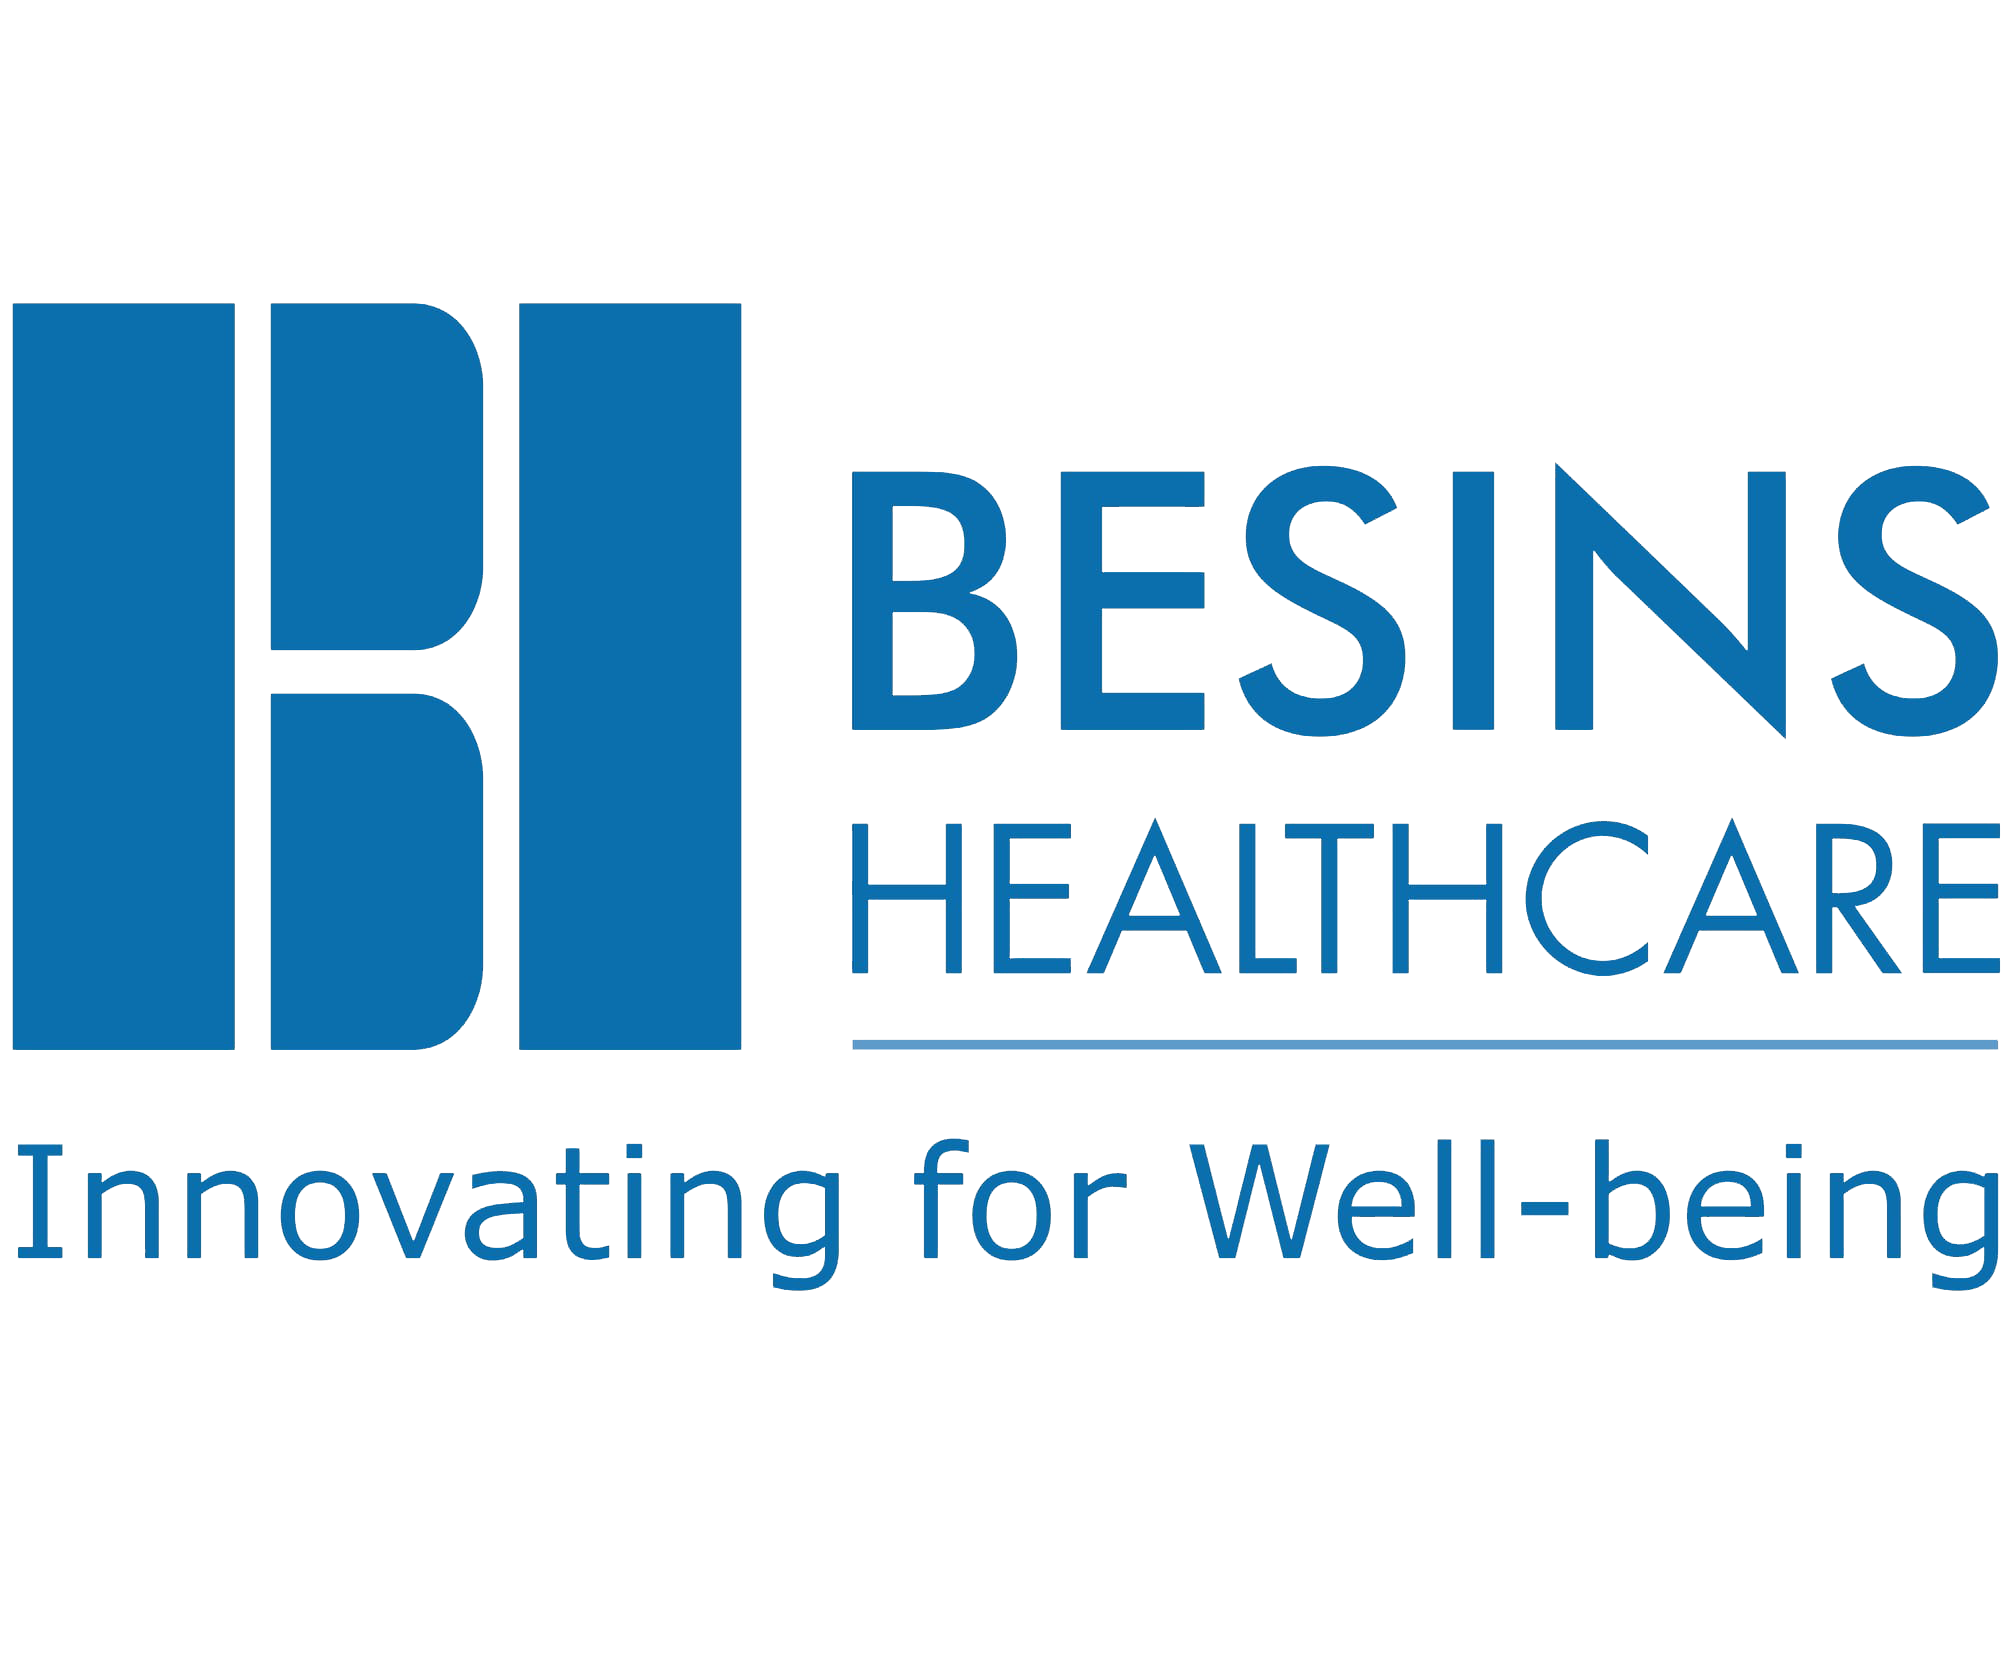 Besins Healthcare